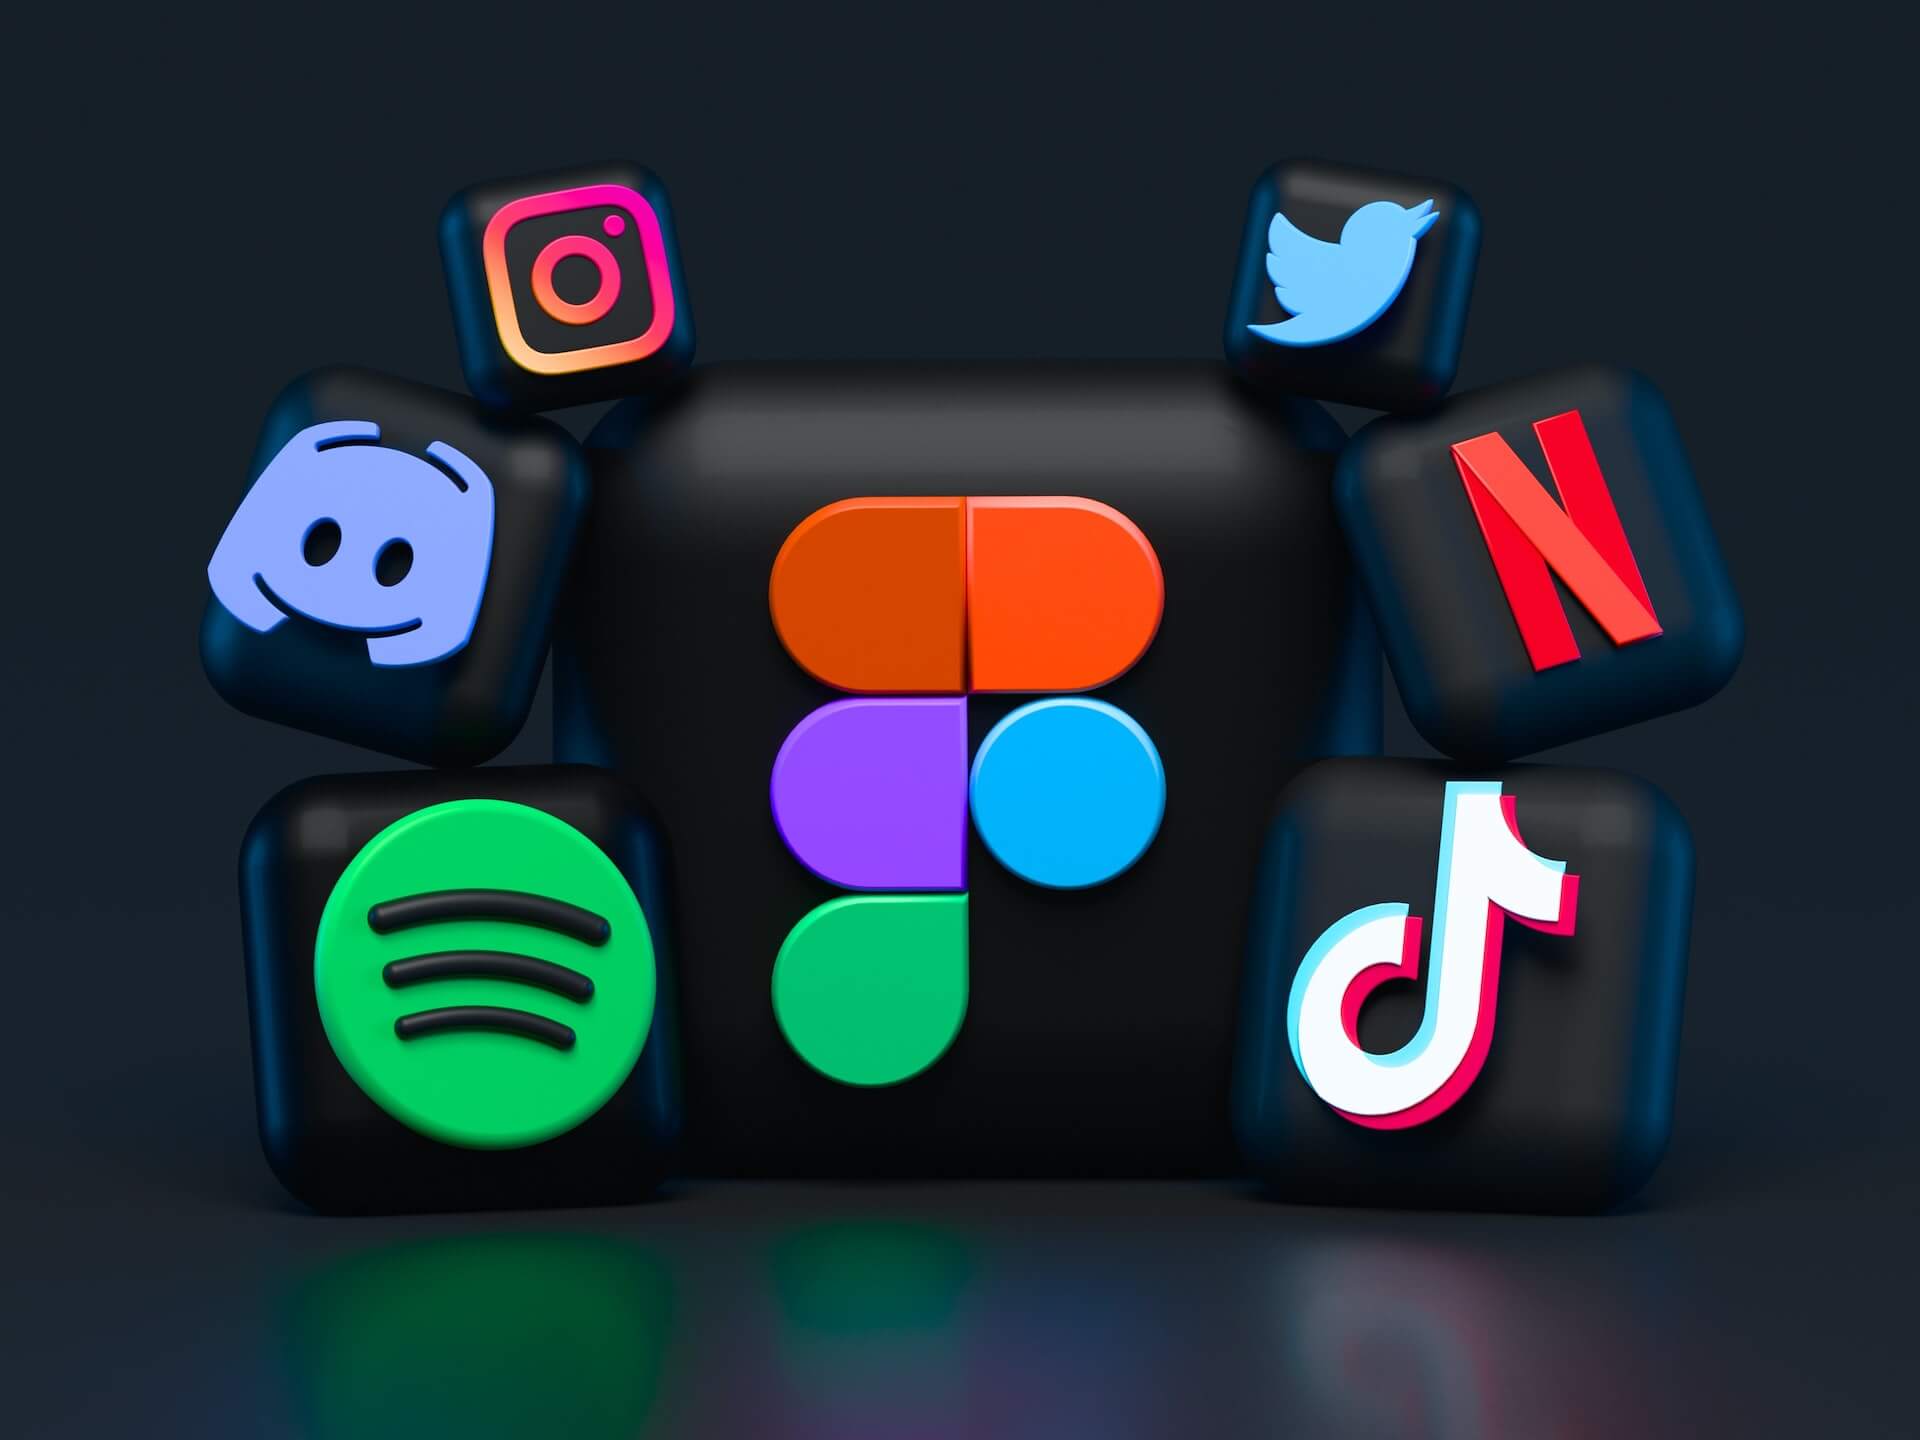 3D Icons of Social Media Apps